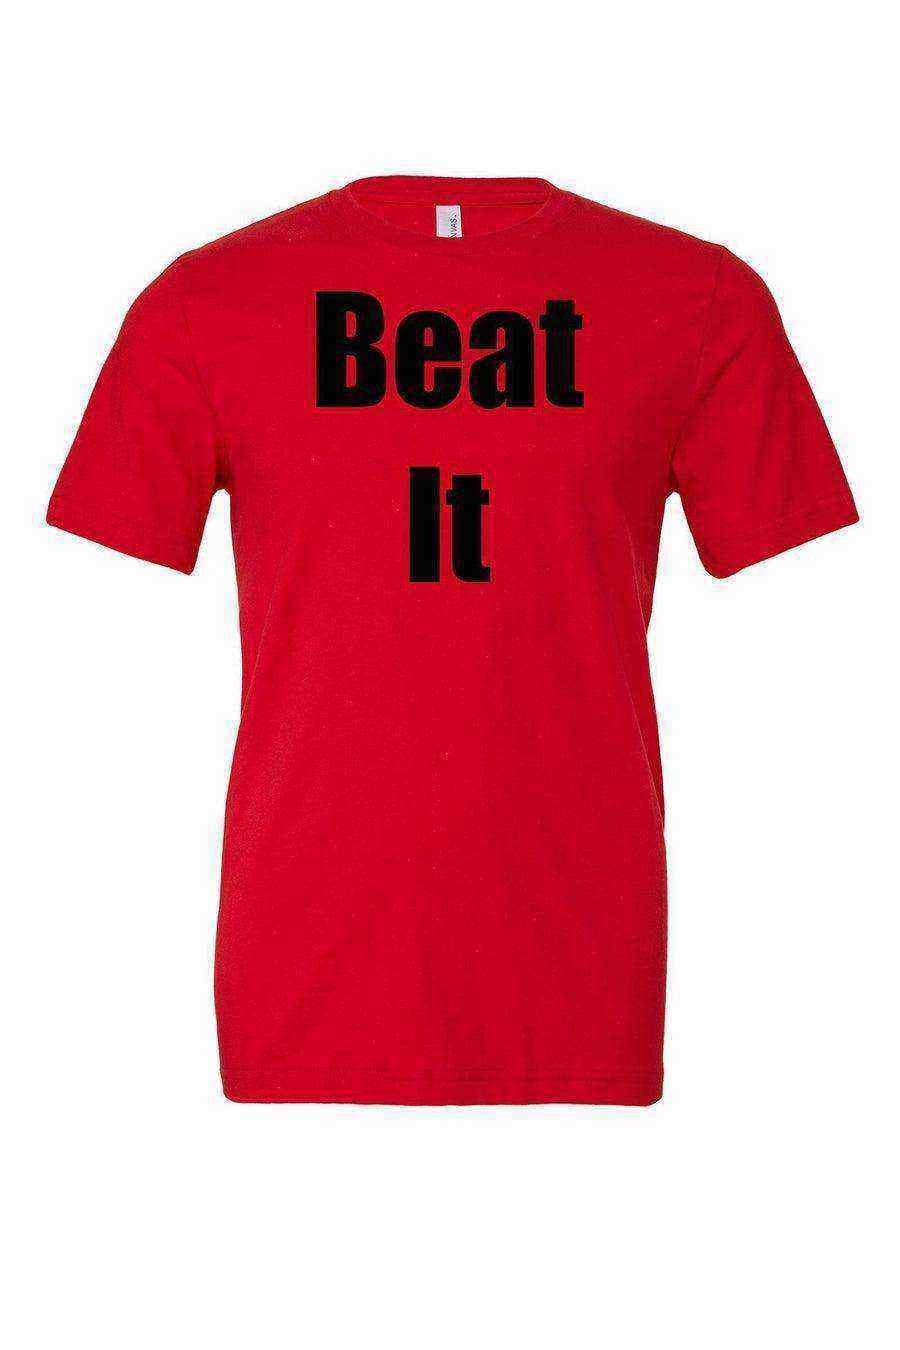 Beat It Shirt - Dylan's Tees